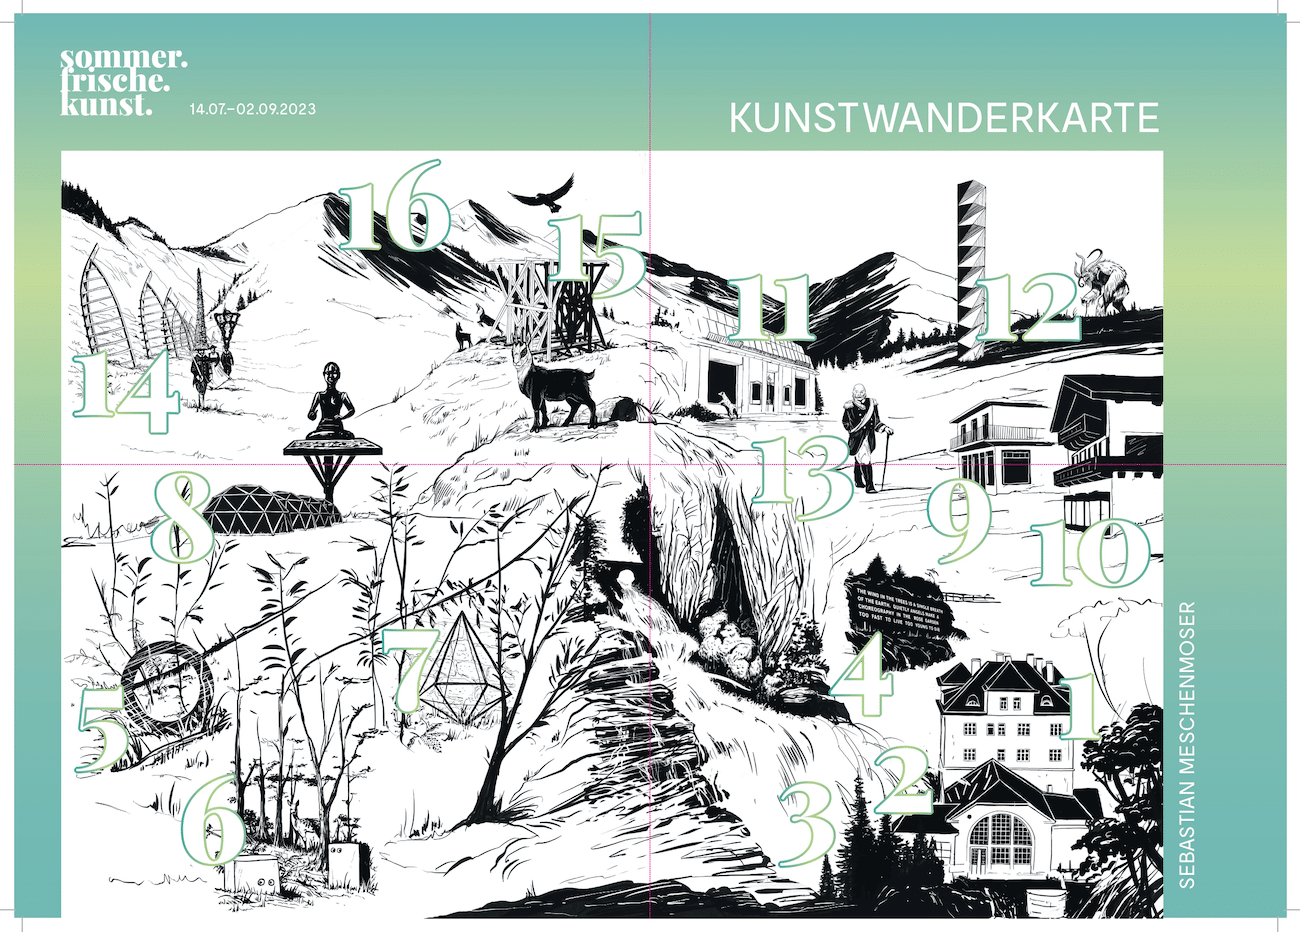 Illustrierte Stationen/Kunstwanderkartendesign von Sebastian Meschenmoser und Kerstin Conradi/Dan Pearlman